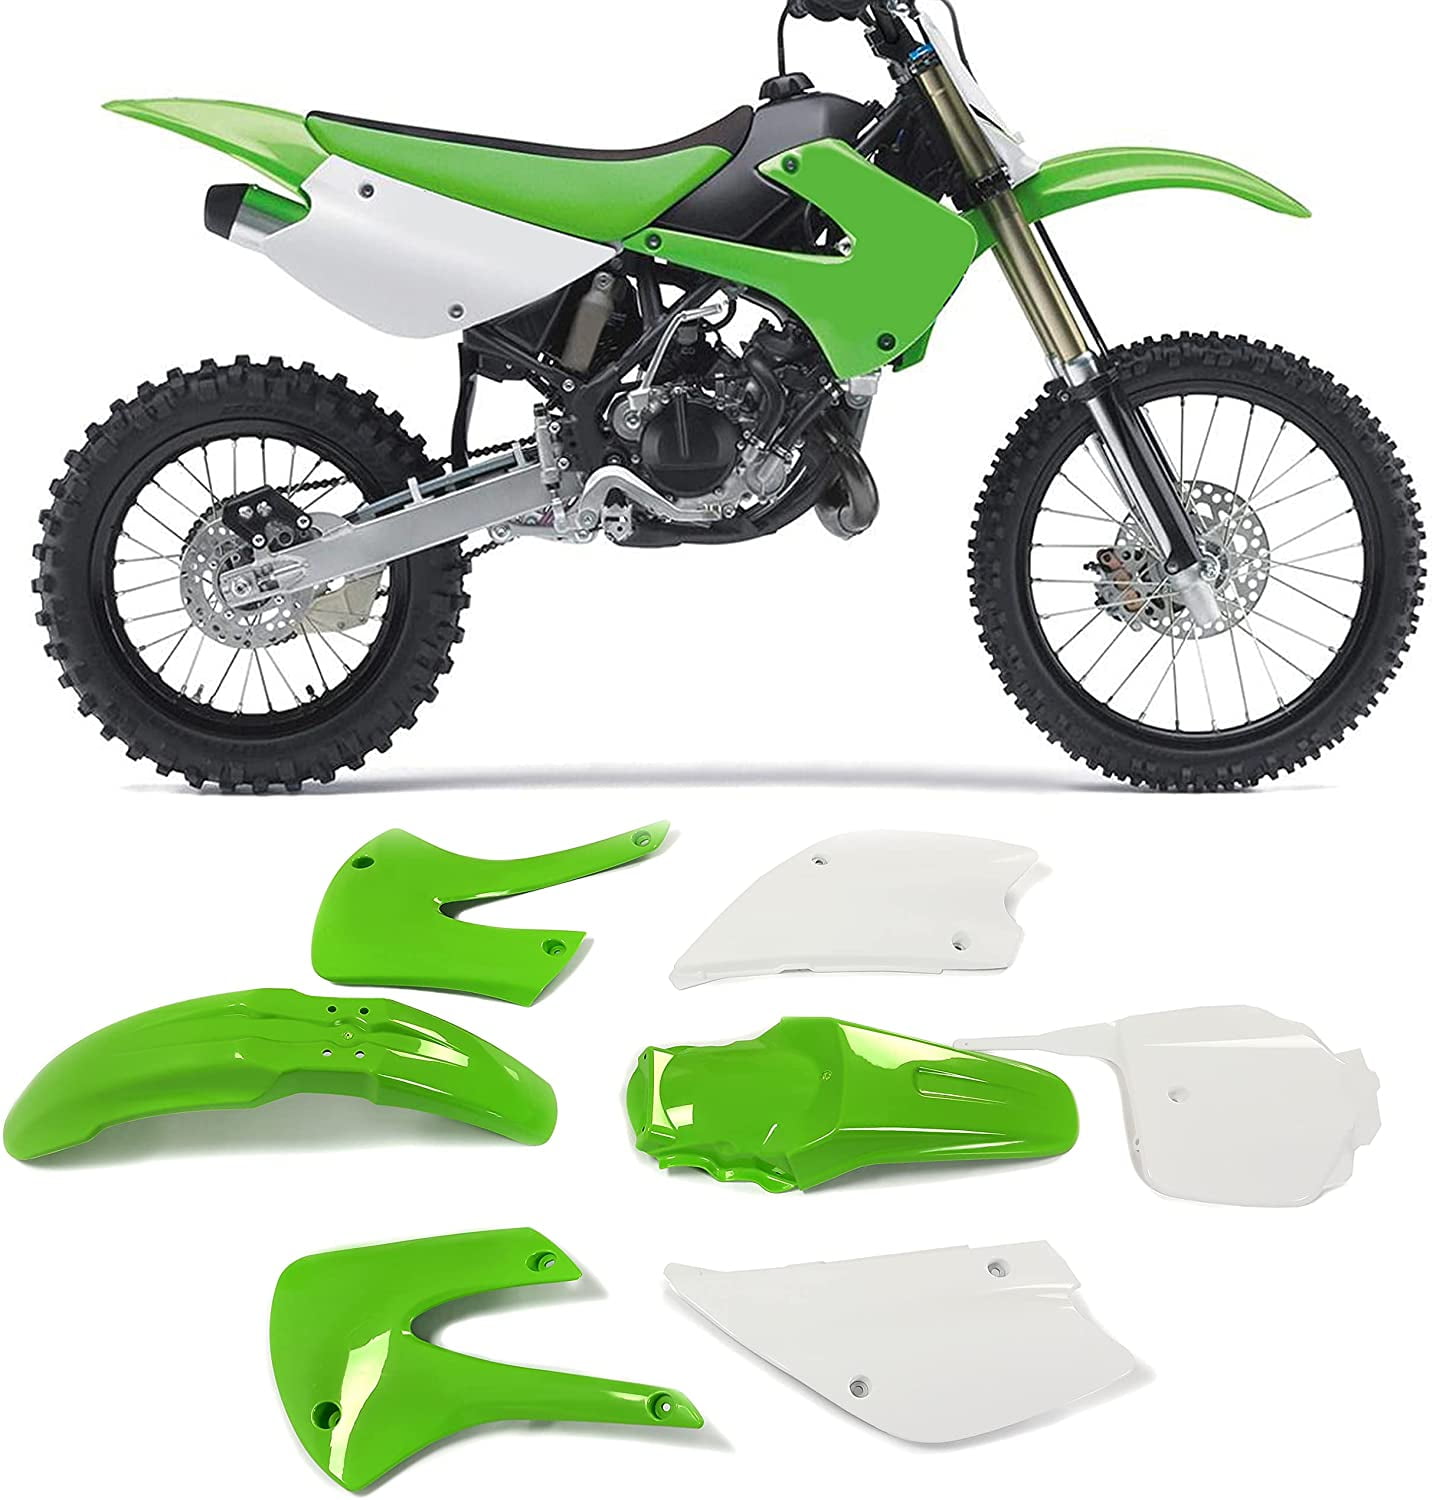 Green+White Kojem Full Plastic Kit Bodywork Compatible With 2001-2013 Kawasaki KX85 KX100 